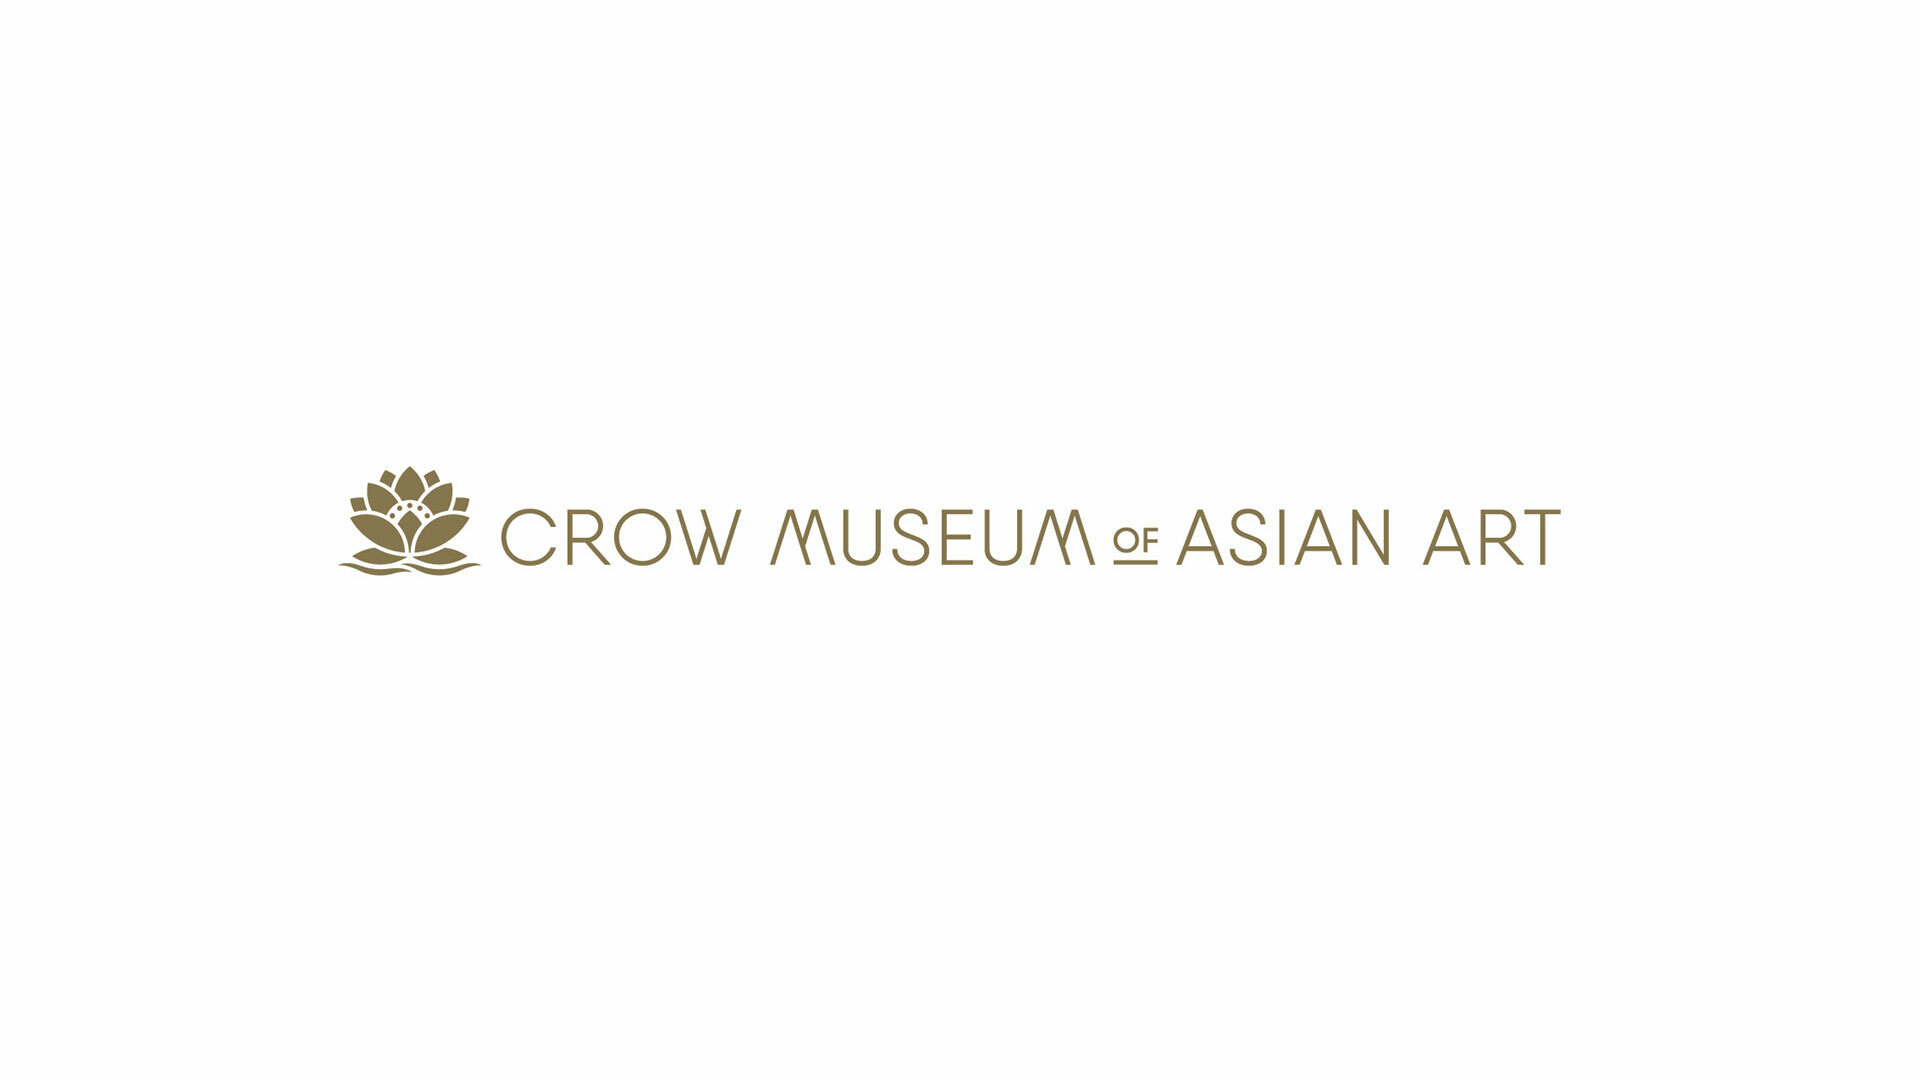 Crow Museum of Asian Art